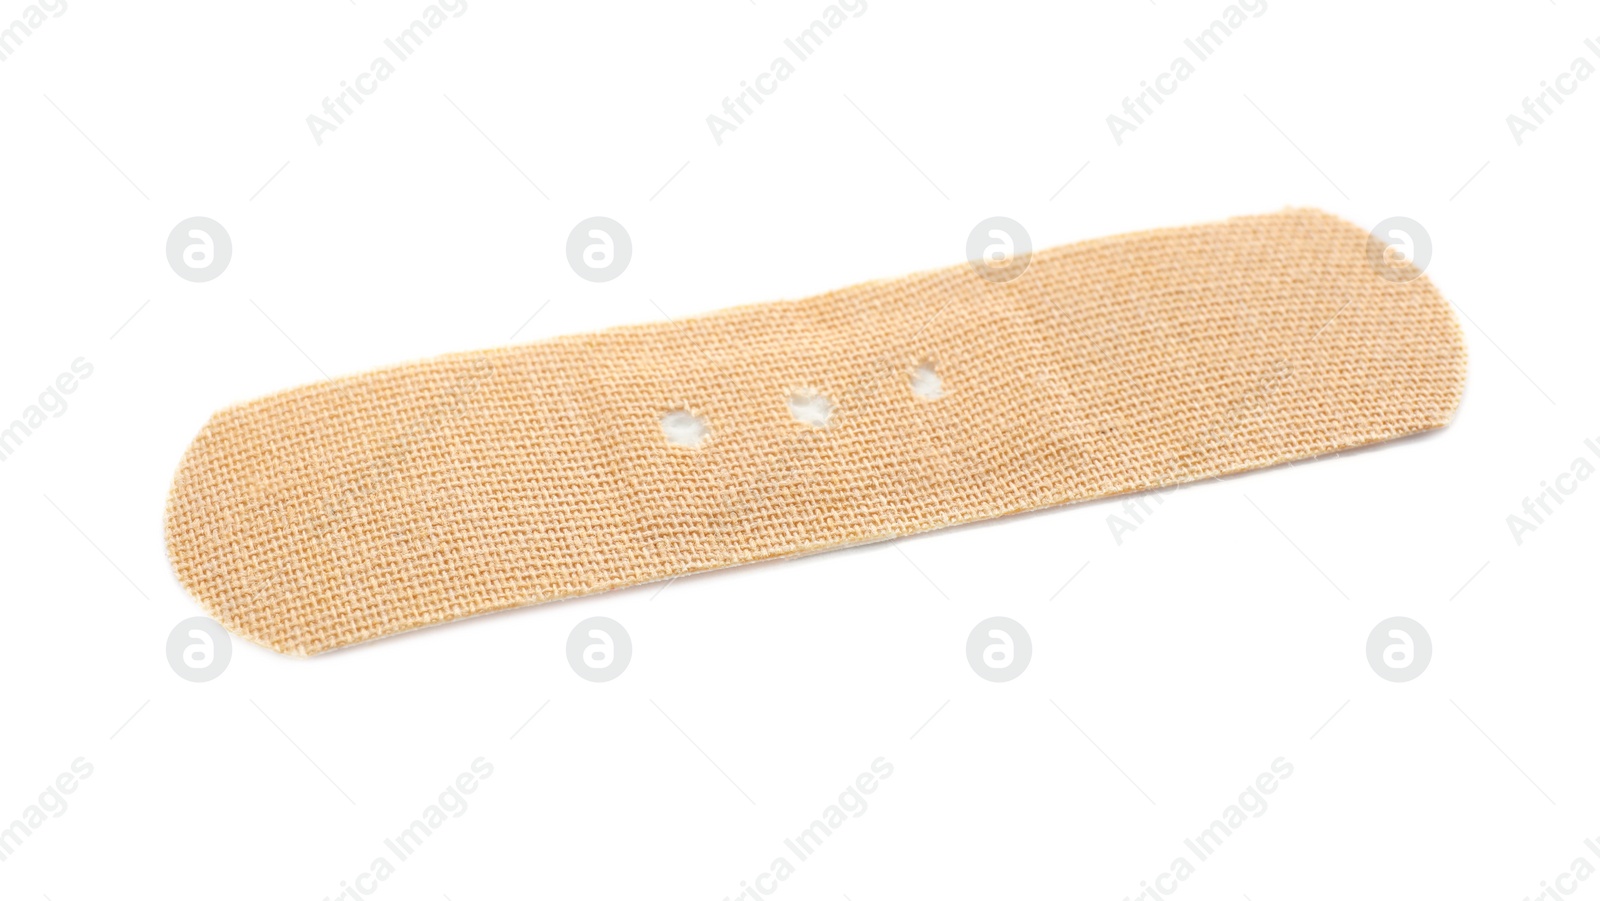 Photo of Adhesive plaster on white background. Medical item